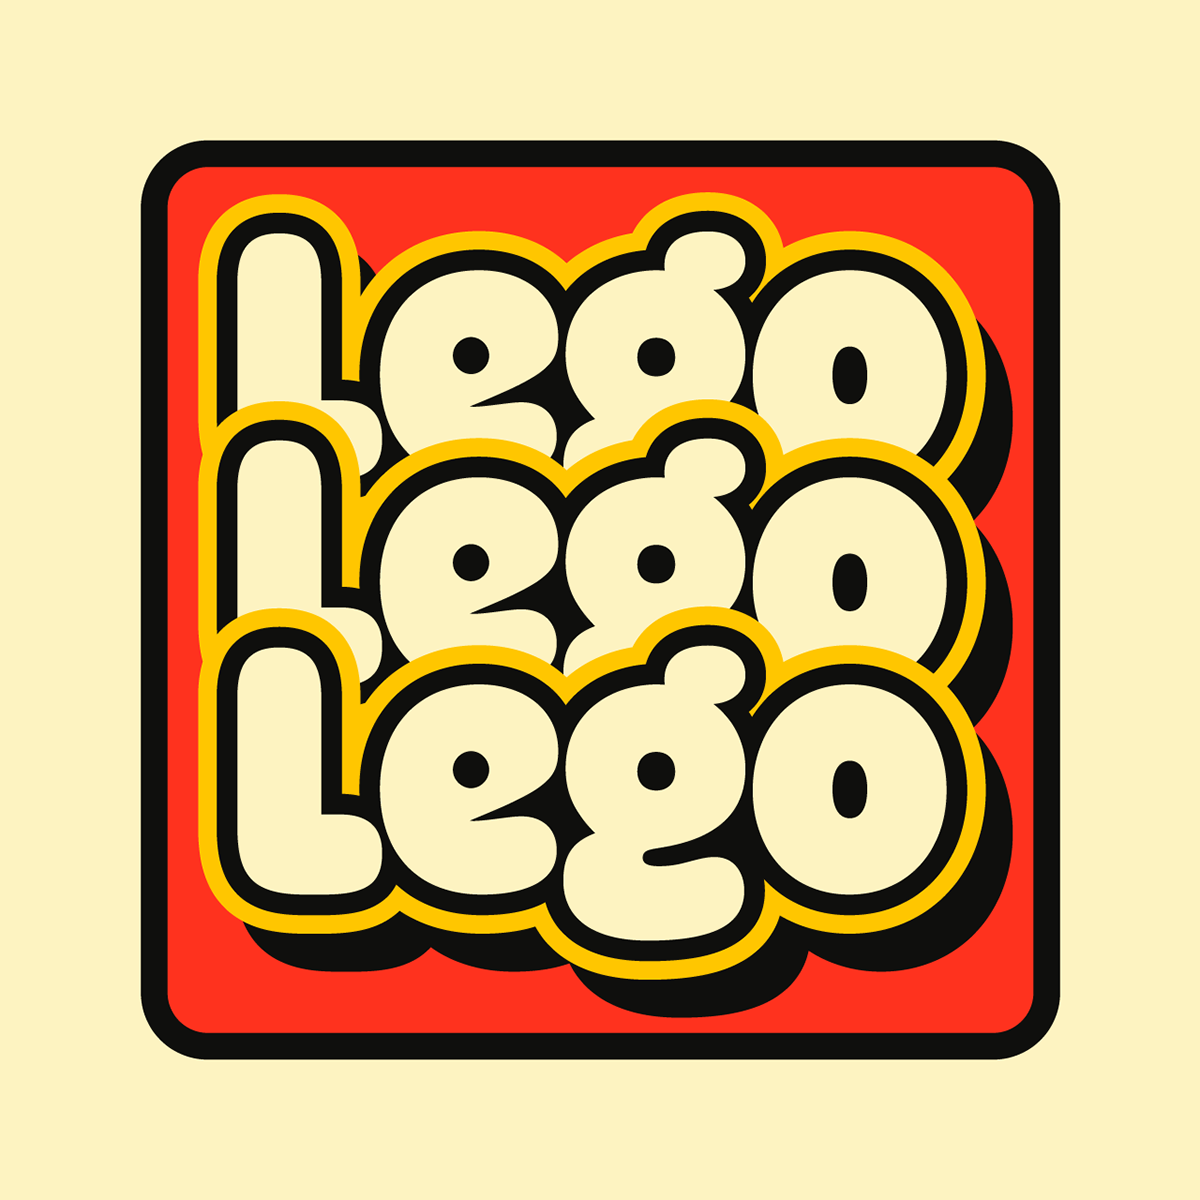 akira paris2024 pepsi 1984 george orwell LEGO spiderman Burger King blade runner 2049 Nike japan